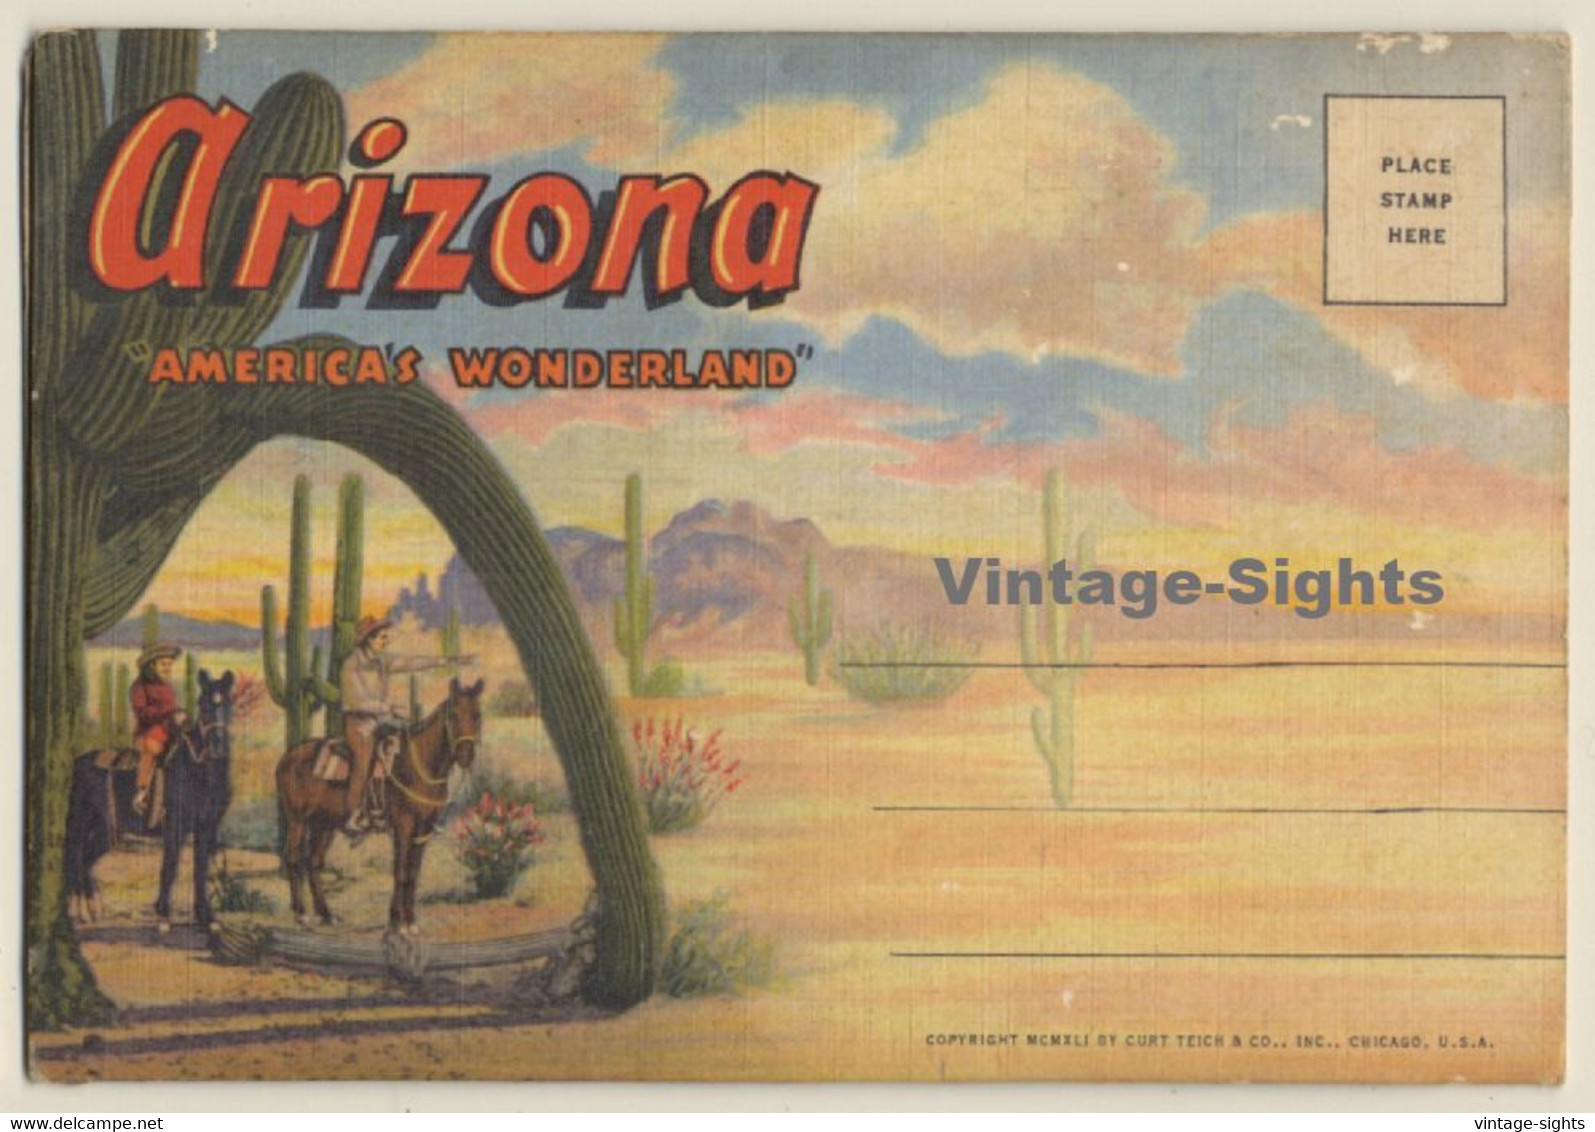 Arizona / USA: America's Wonderland (Vintage Leporello PC ~1940s) - Chattanooga